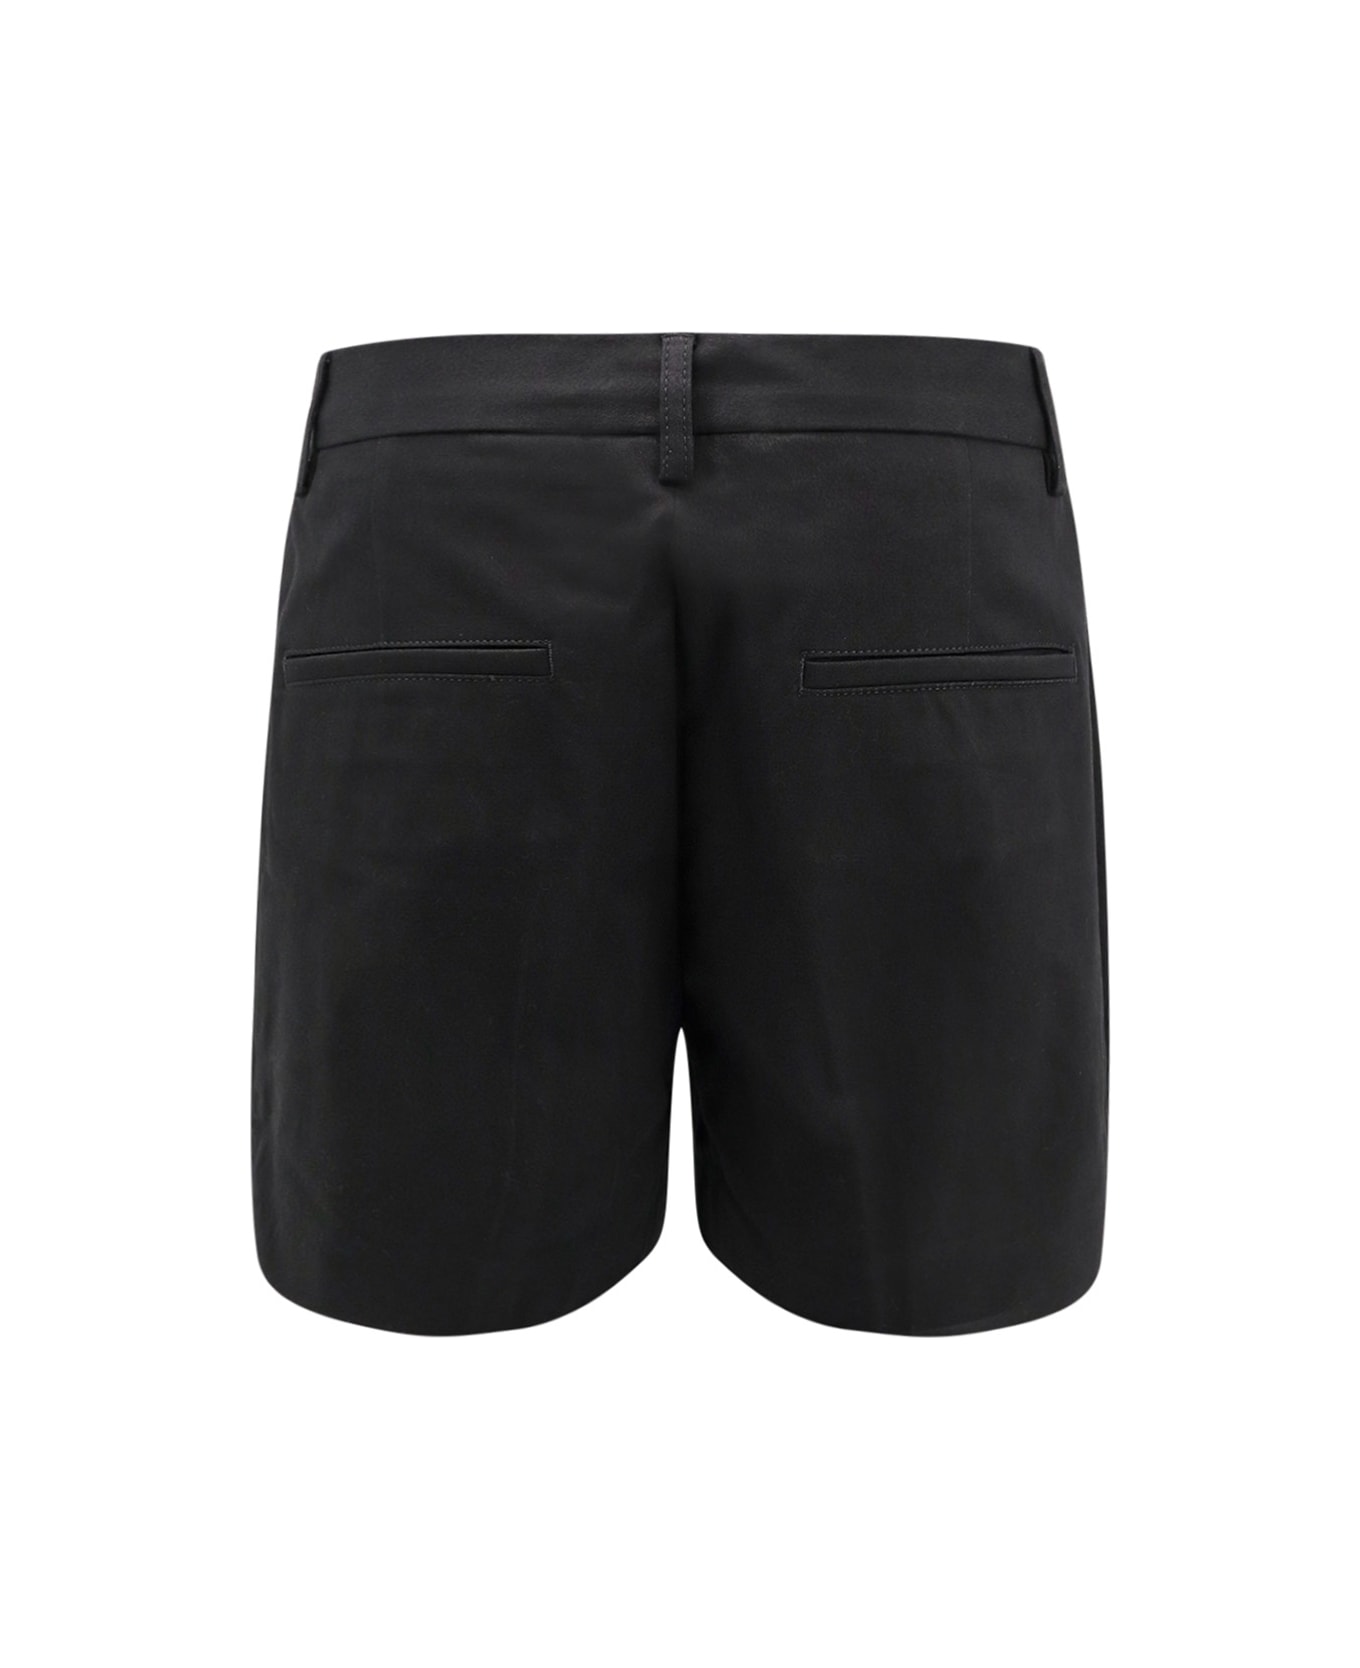 Closed Shorts - Black